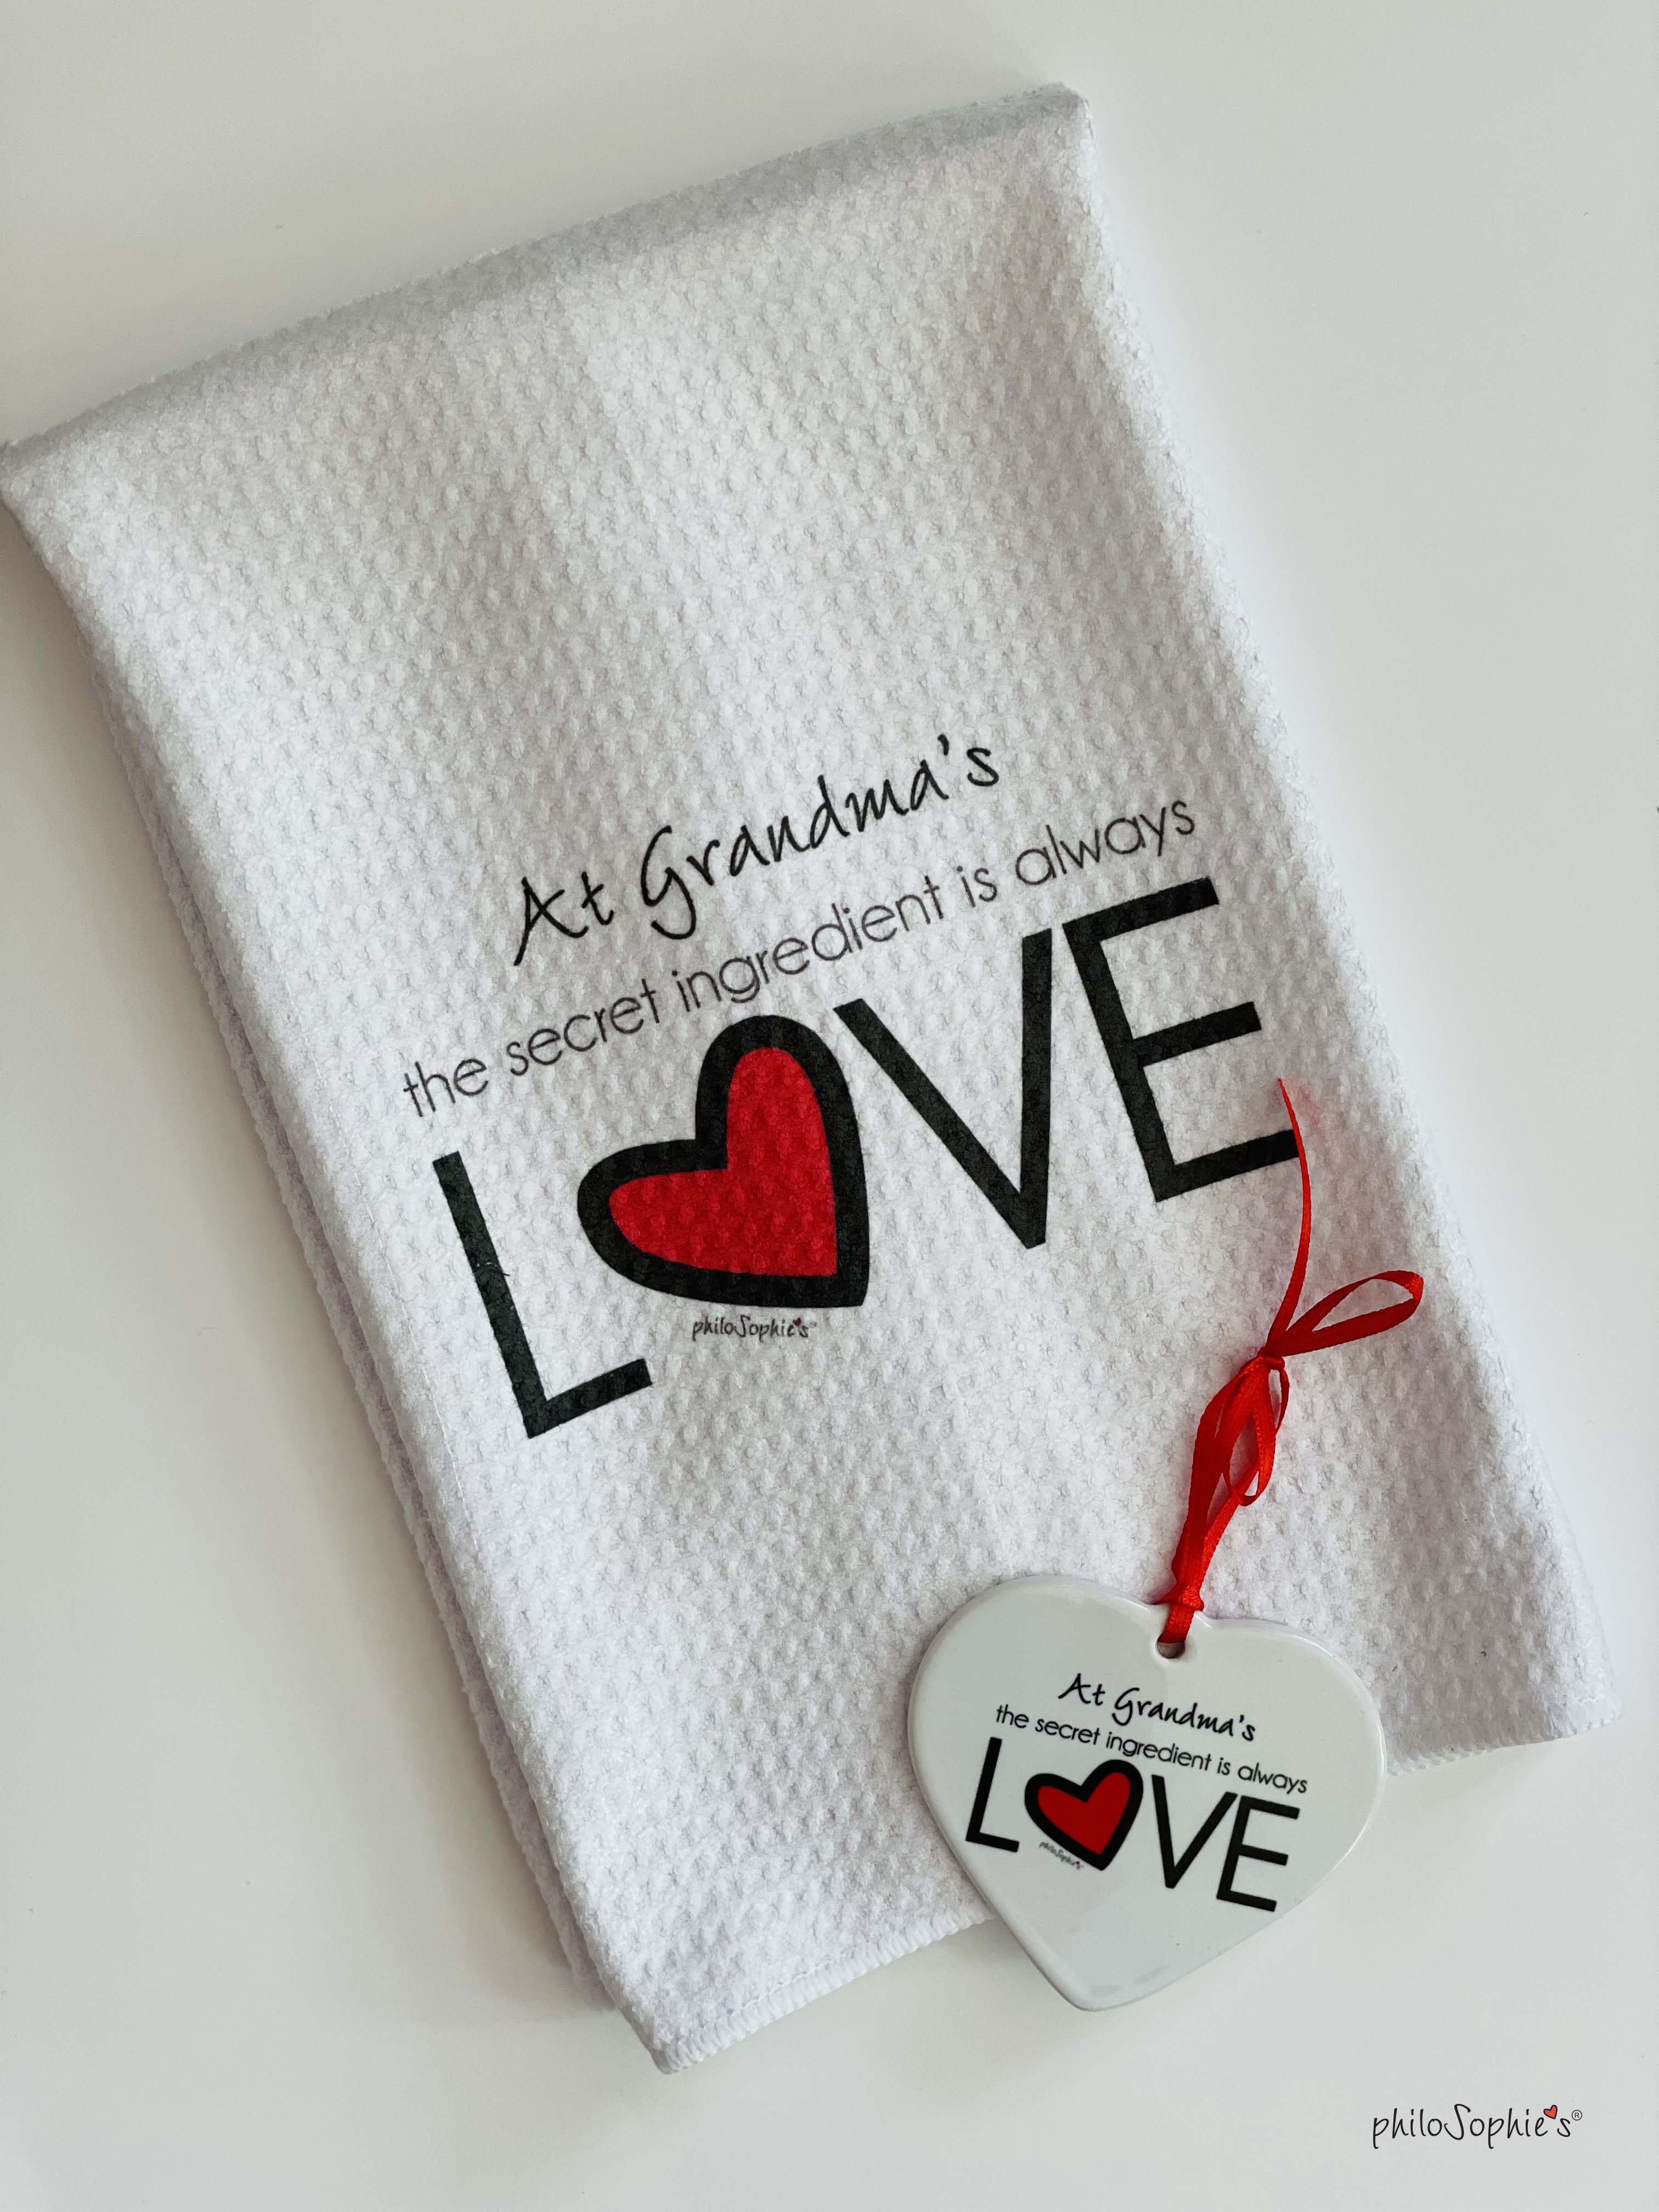 Personalized - Secret Ingredient is Always Love Towel/Ornament Gift Set